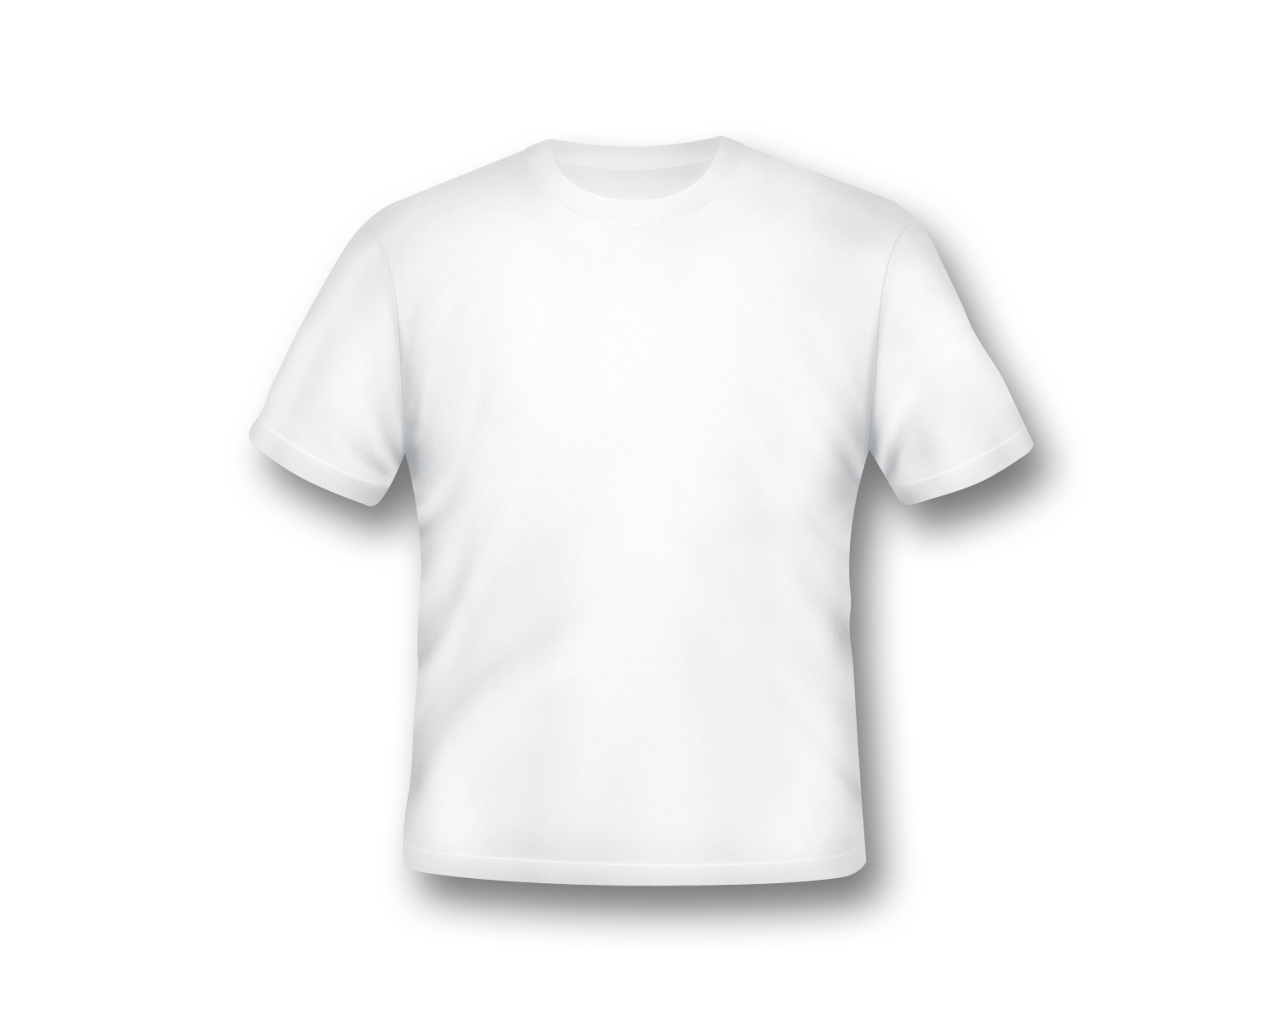 Download Blank White TShirt Template HQ PNG Image FreePNGImg